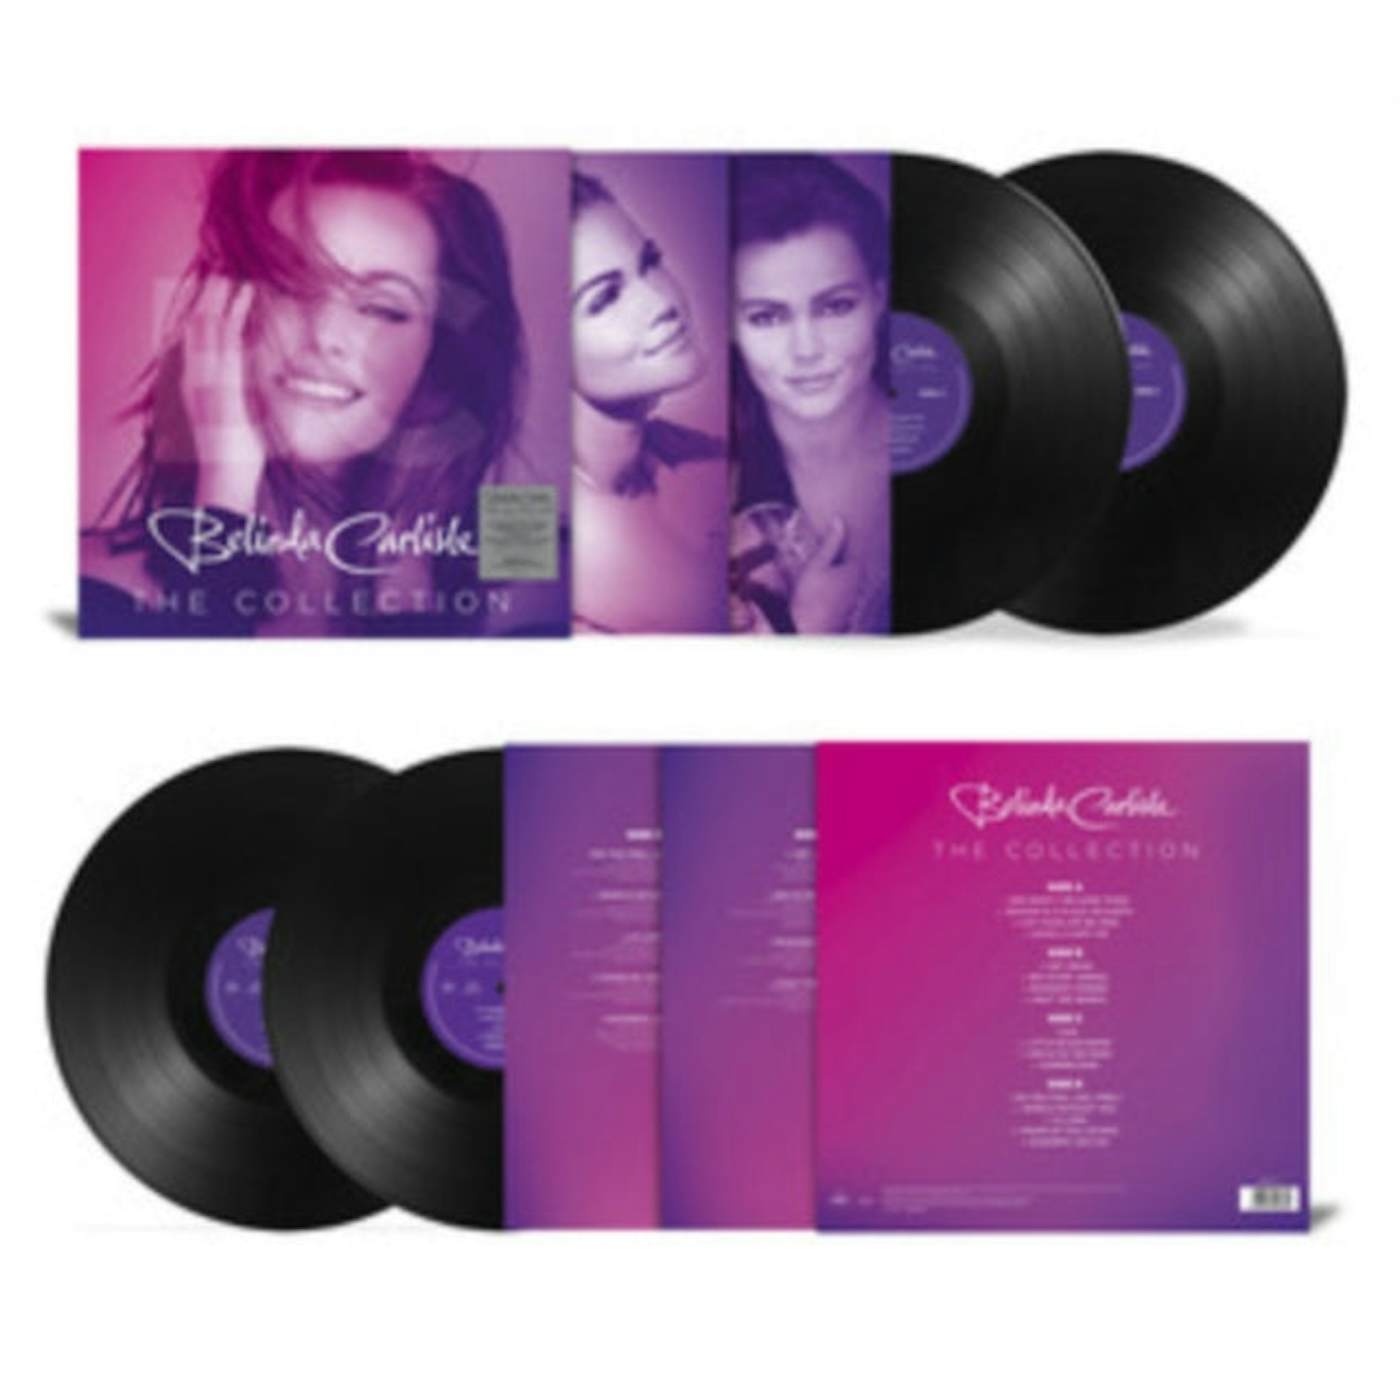 Belinda Carlisle LP Vinyl Record - The Collection